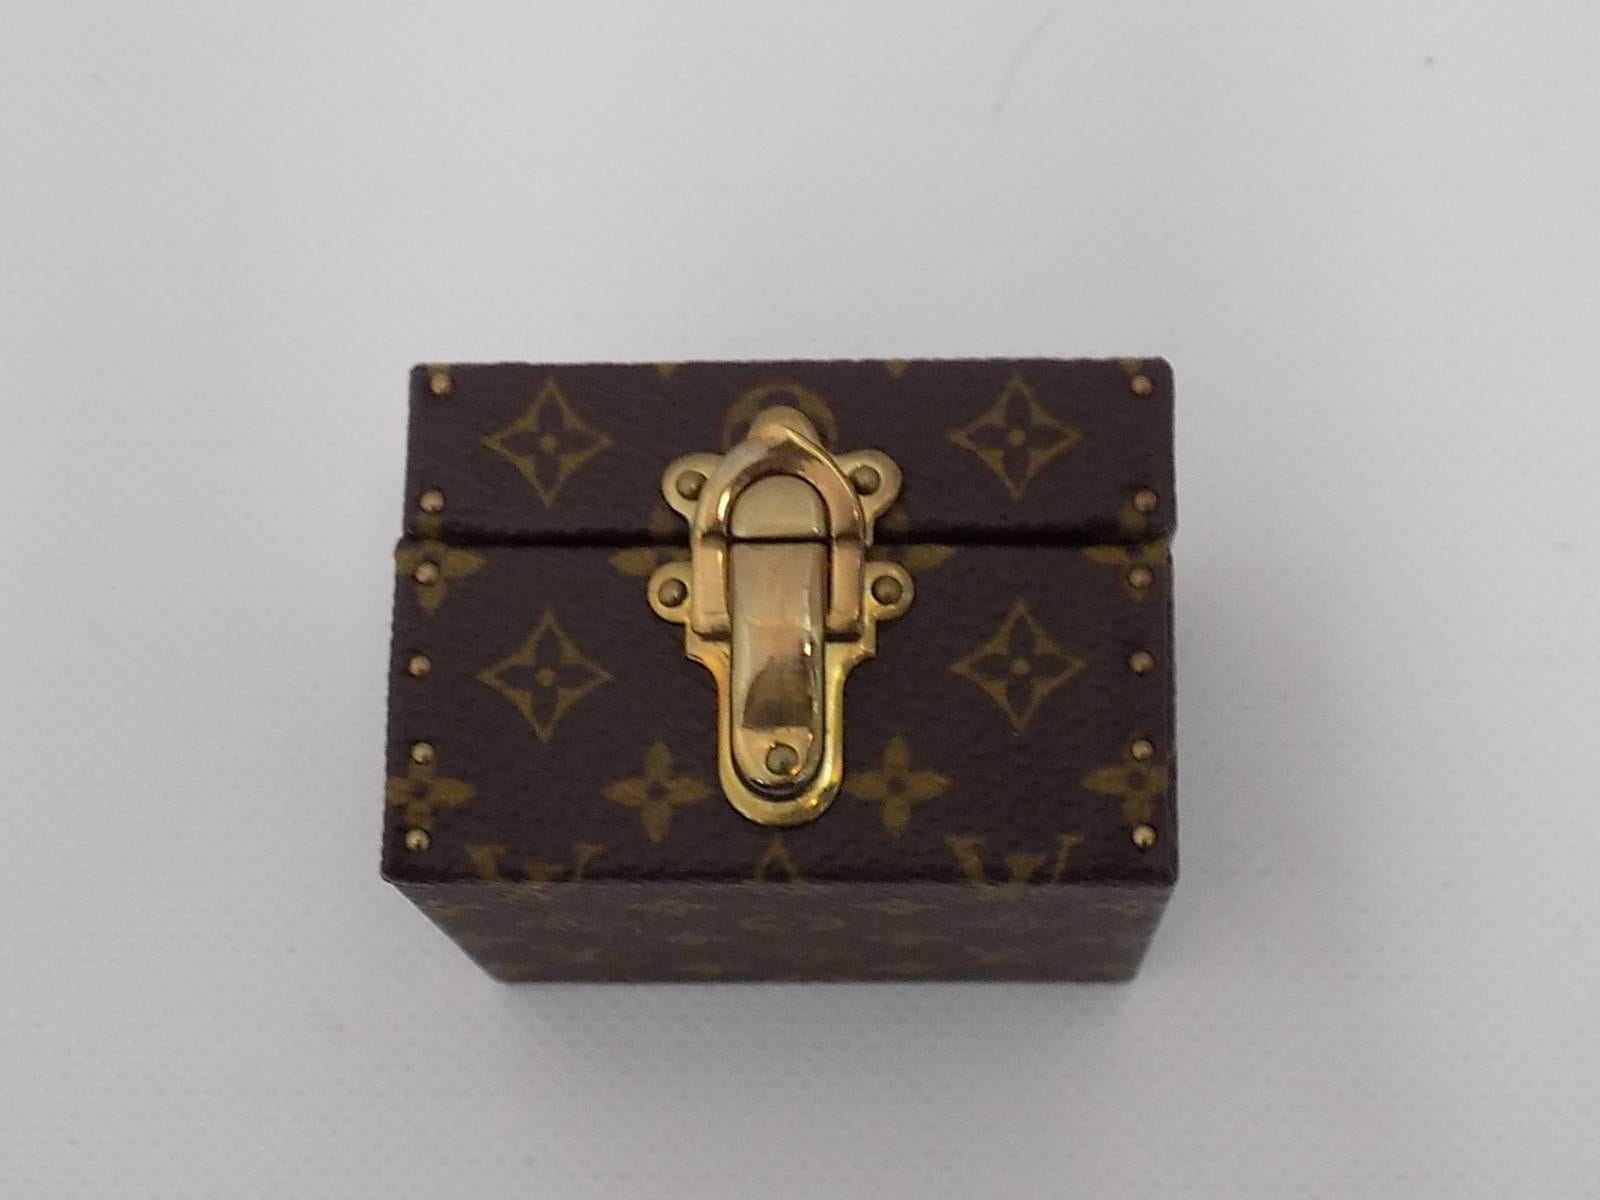 LOUIS VUITTON Monogram Ring Box Mini Trunk Case 1102968